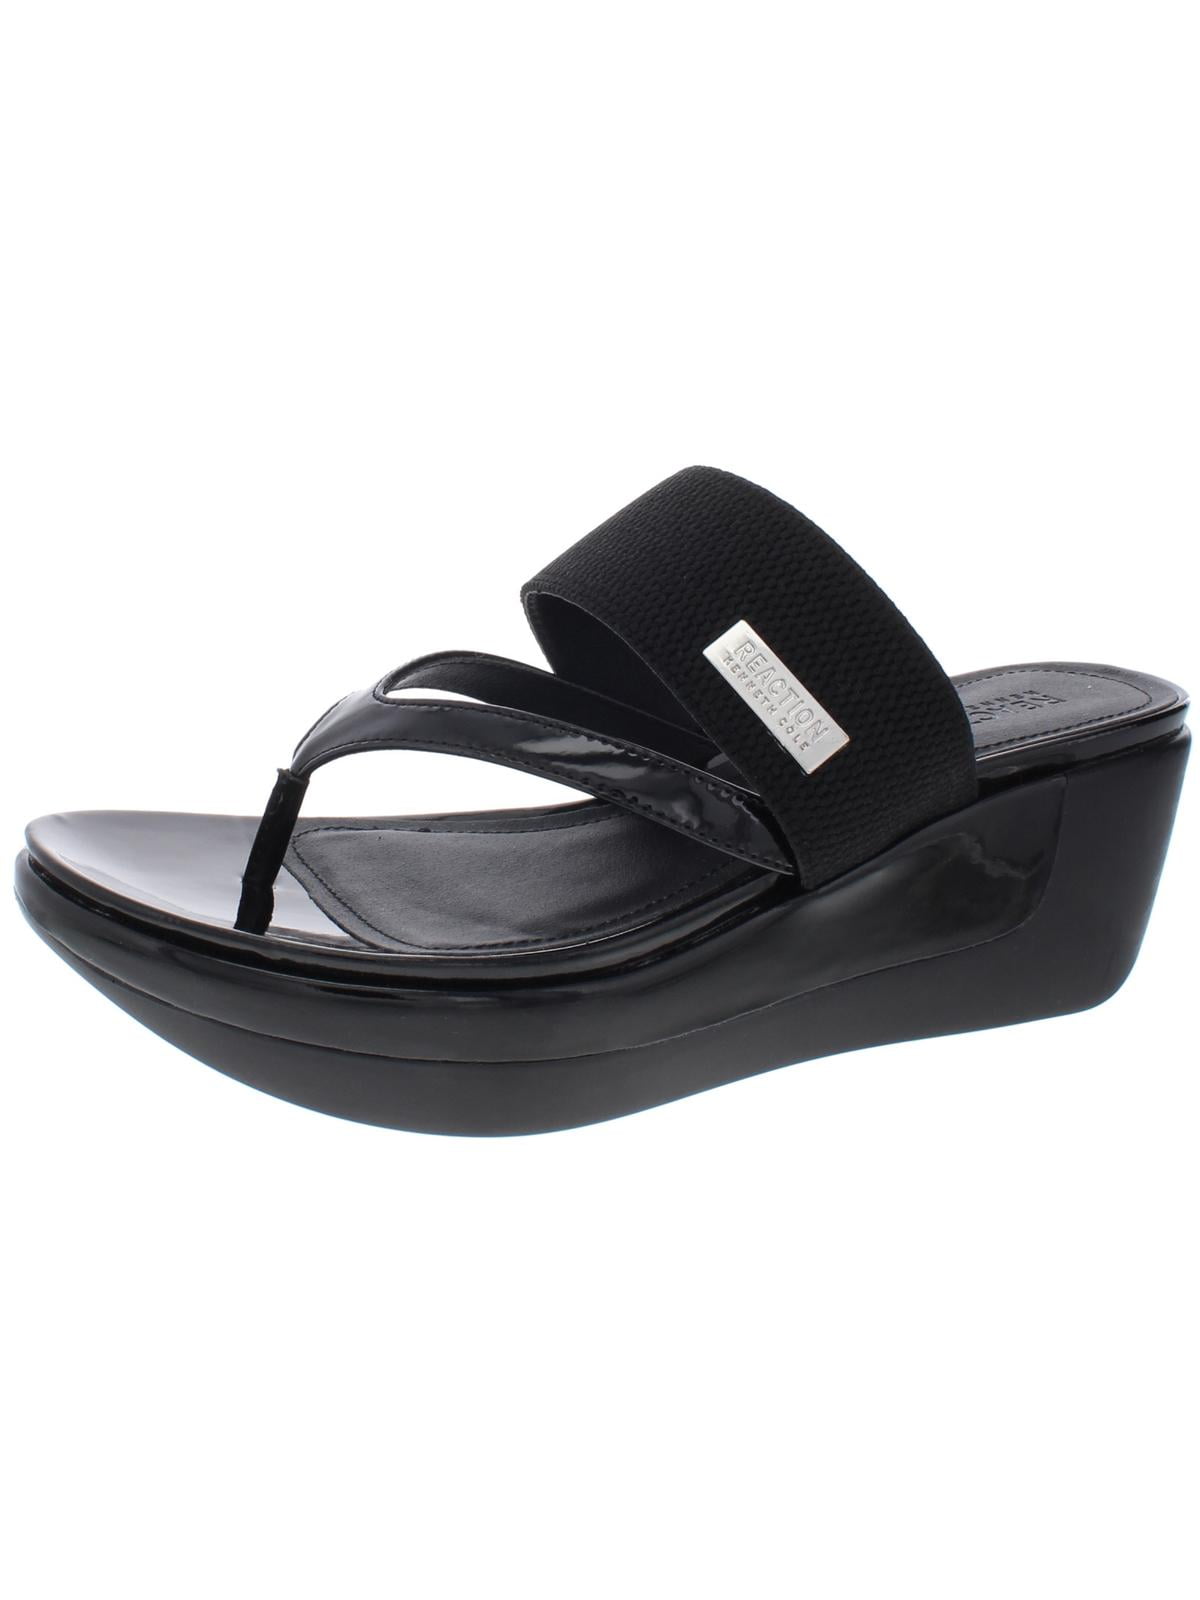 kenneth cole black wedge sandals